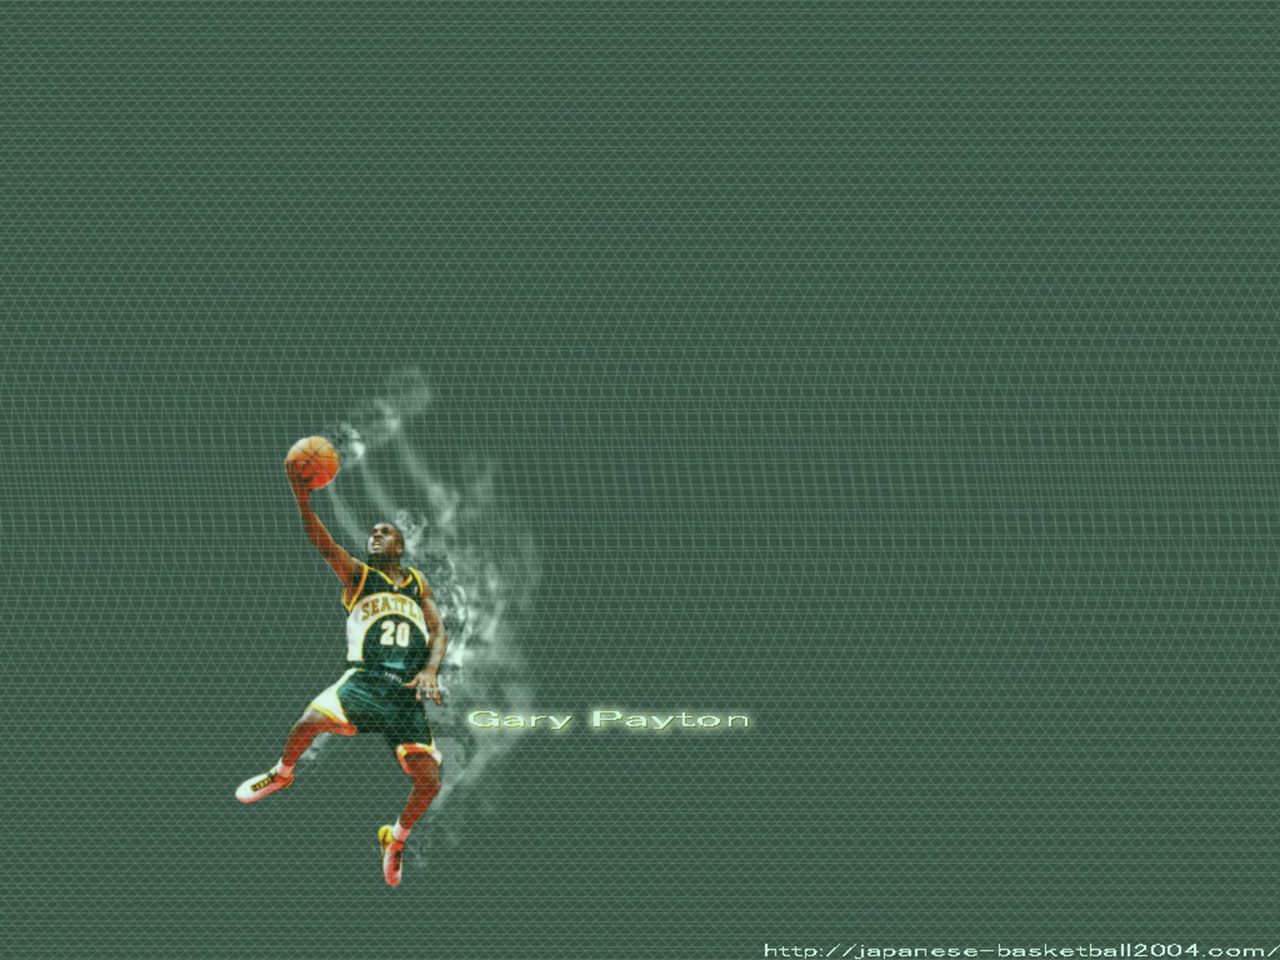 Michael Jordan Wallpaper Dunk For Android: GARY PAYTON